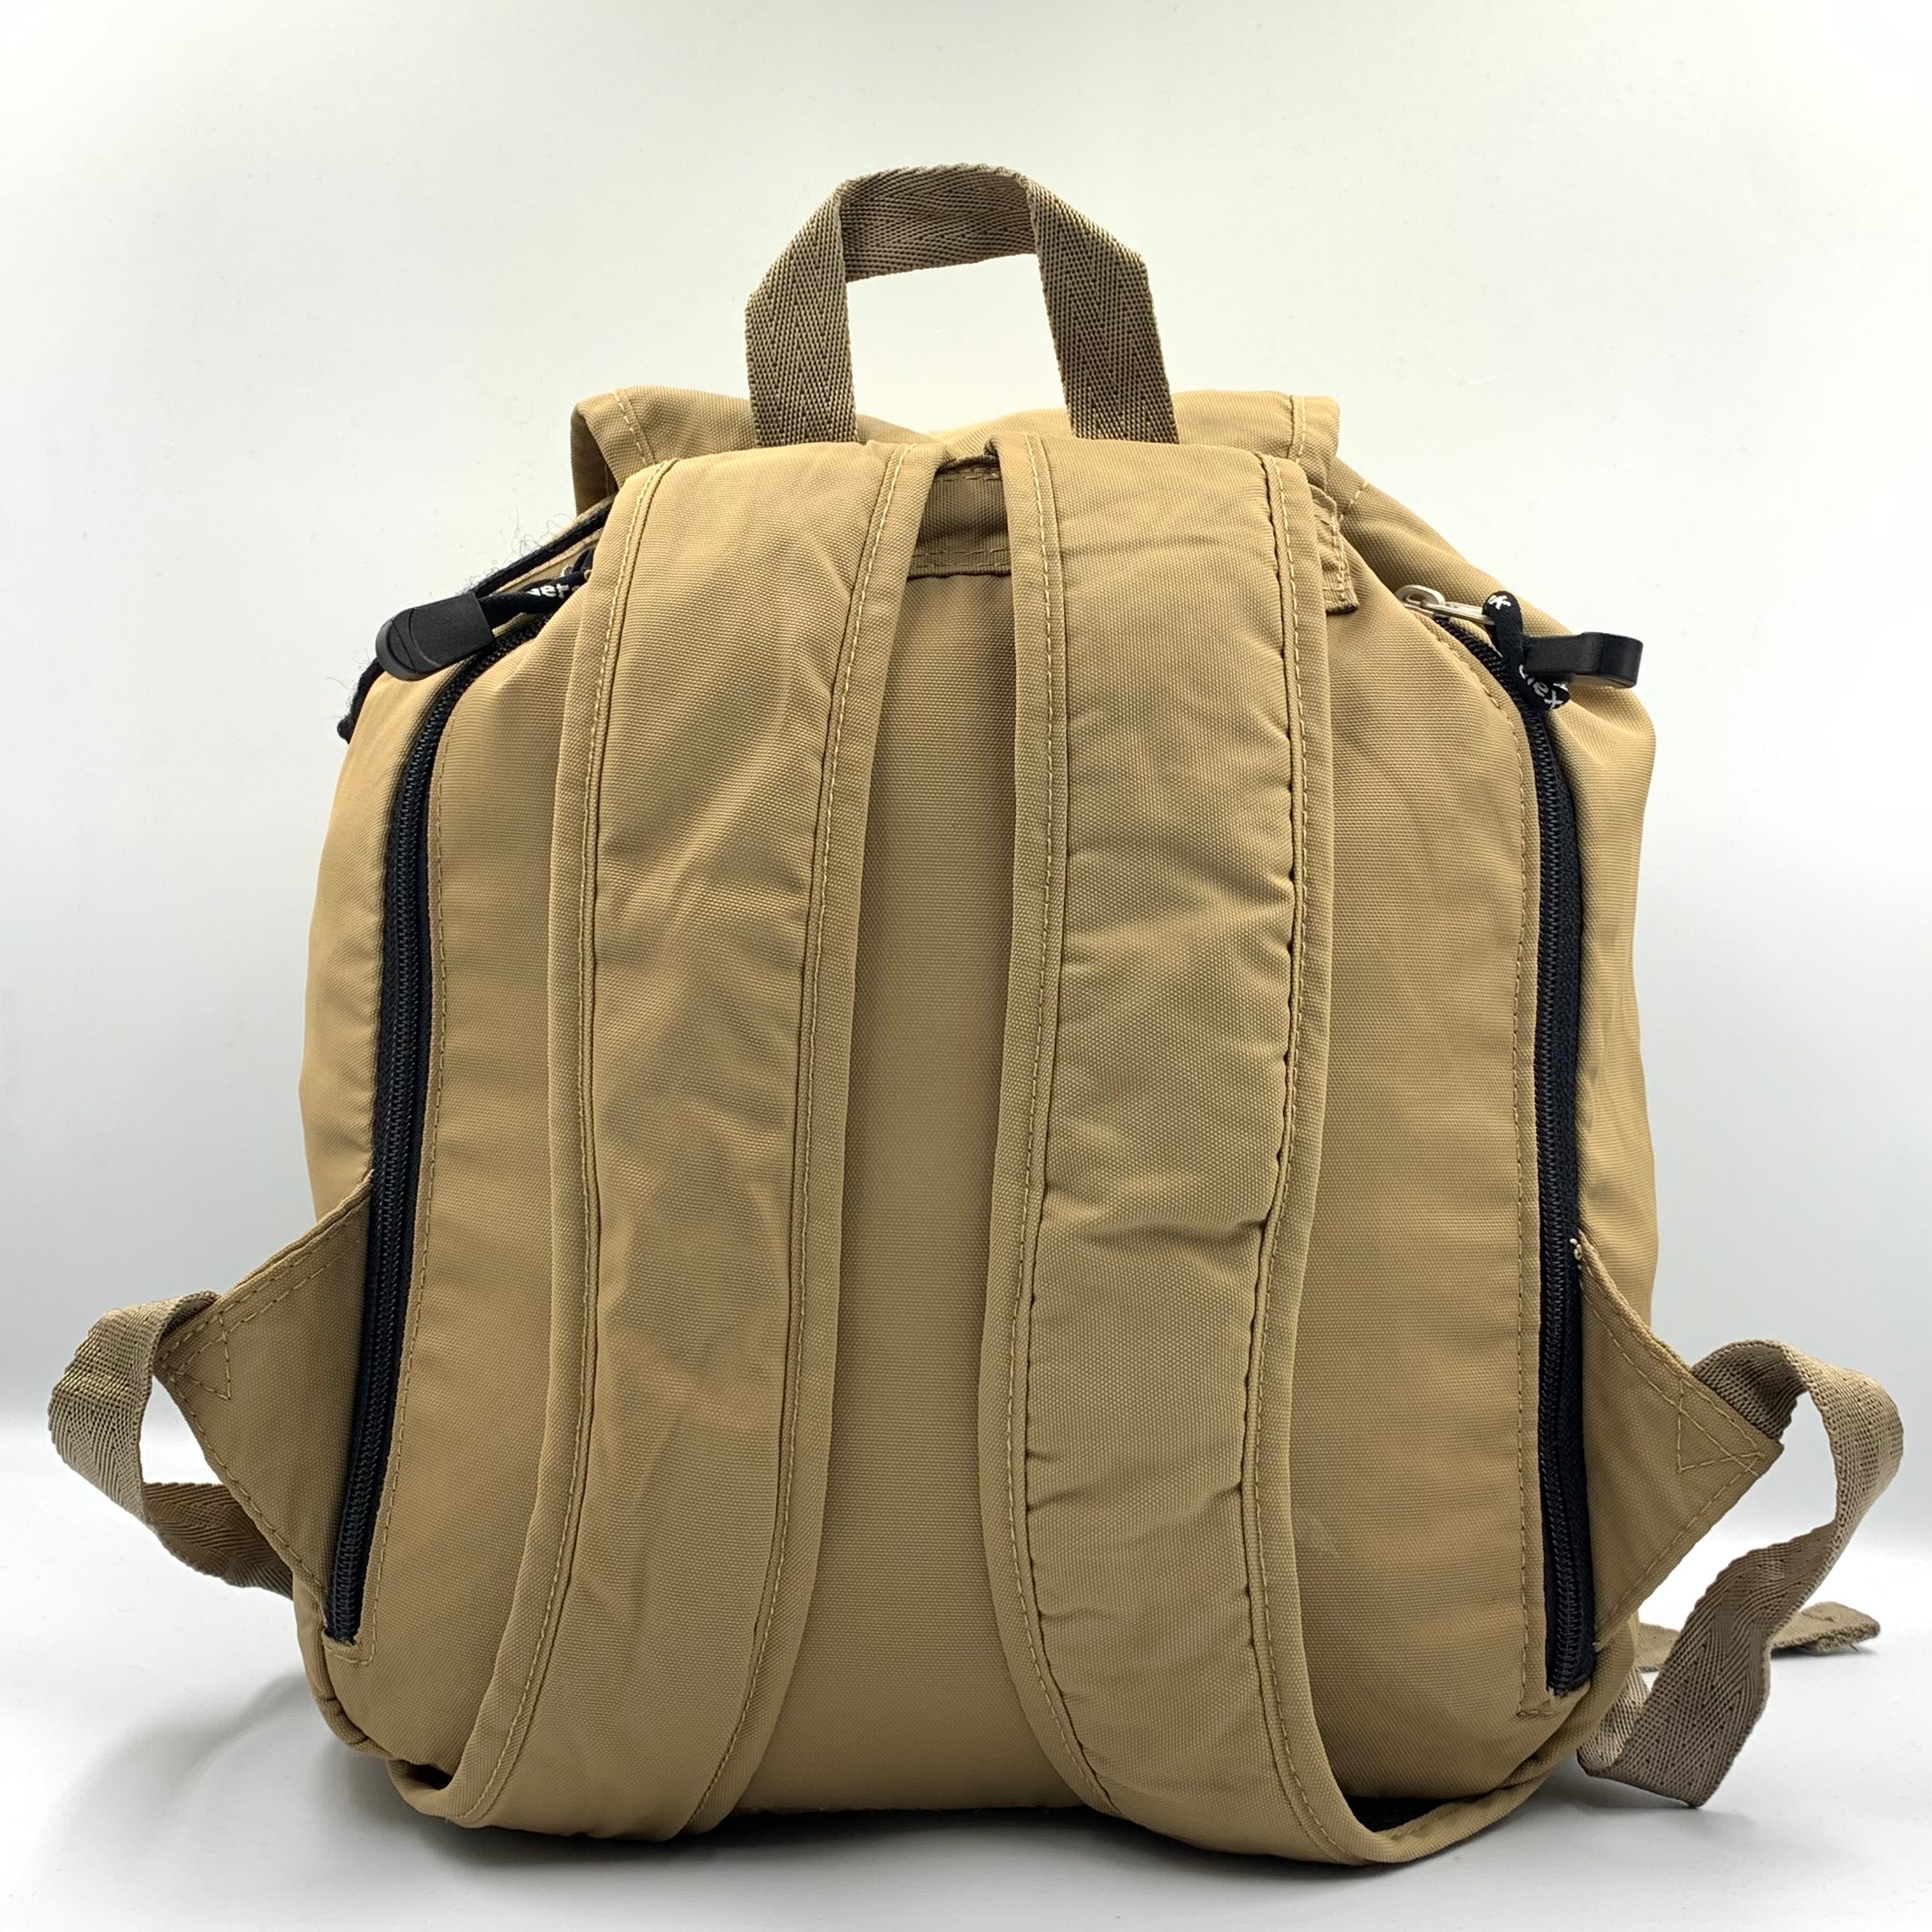 Alexander Brand Stylish For Back Pack Bag Unisex